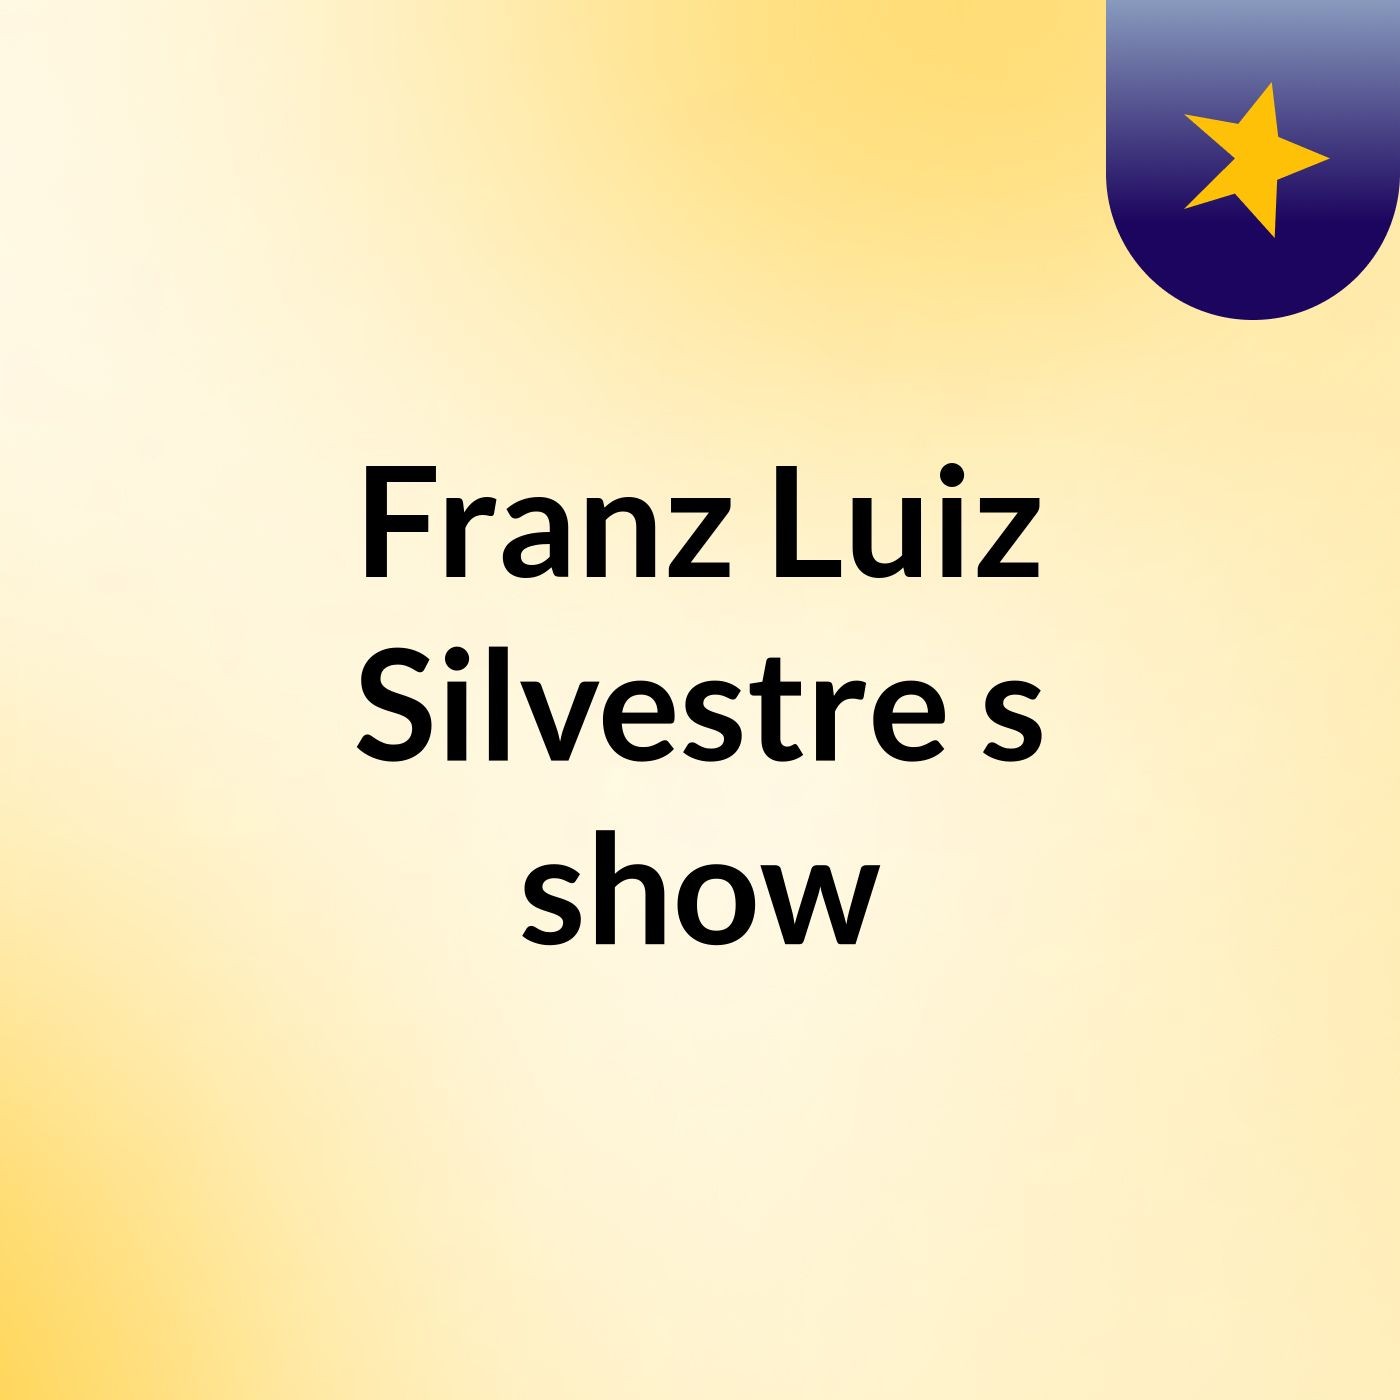 Franz Luiz Silvestre's show